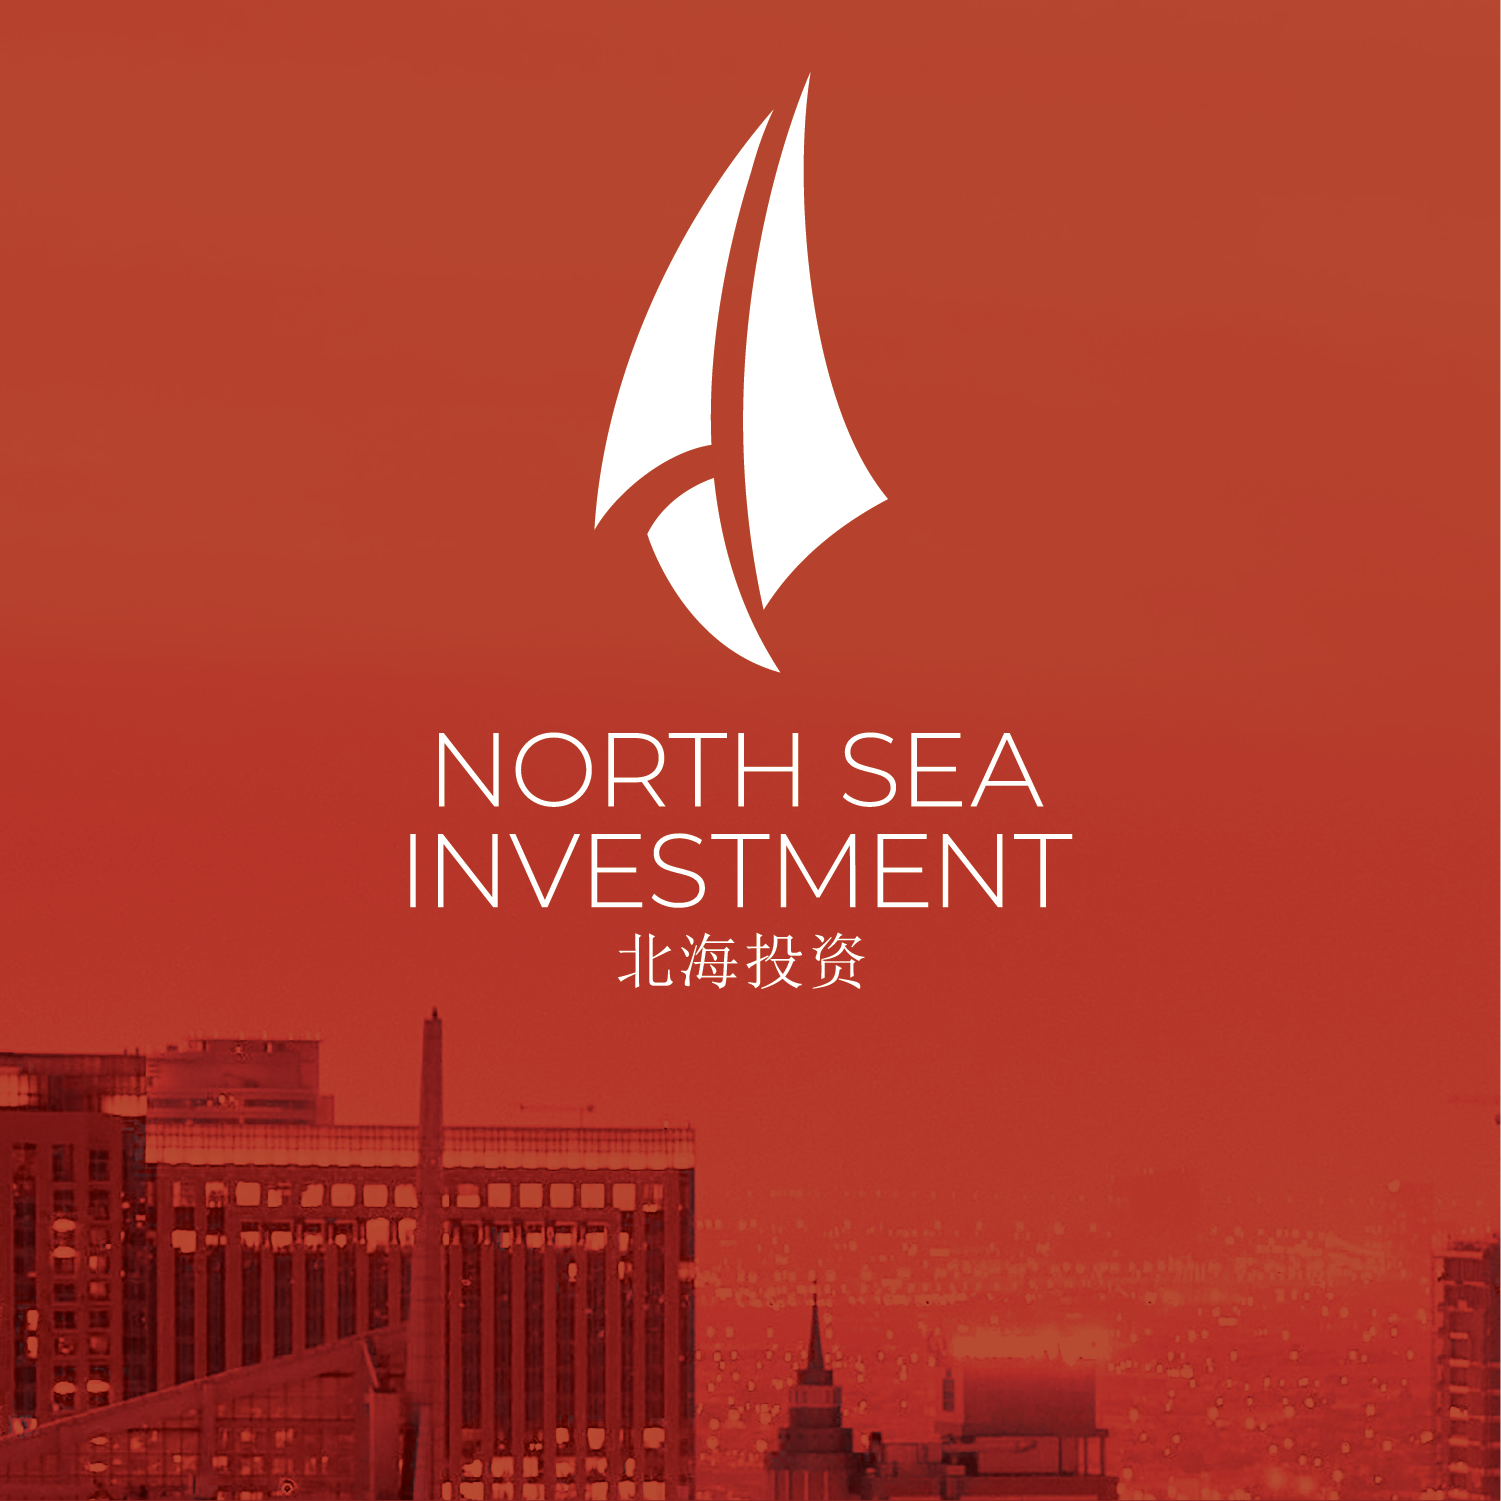 North Sea Investment